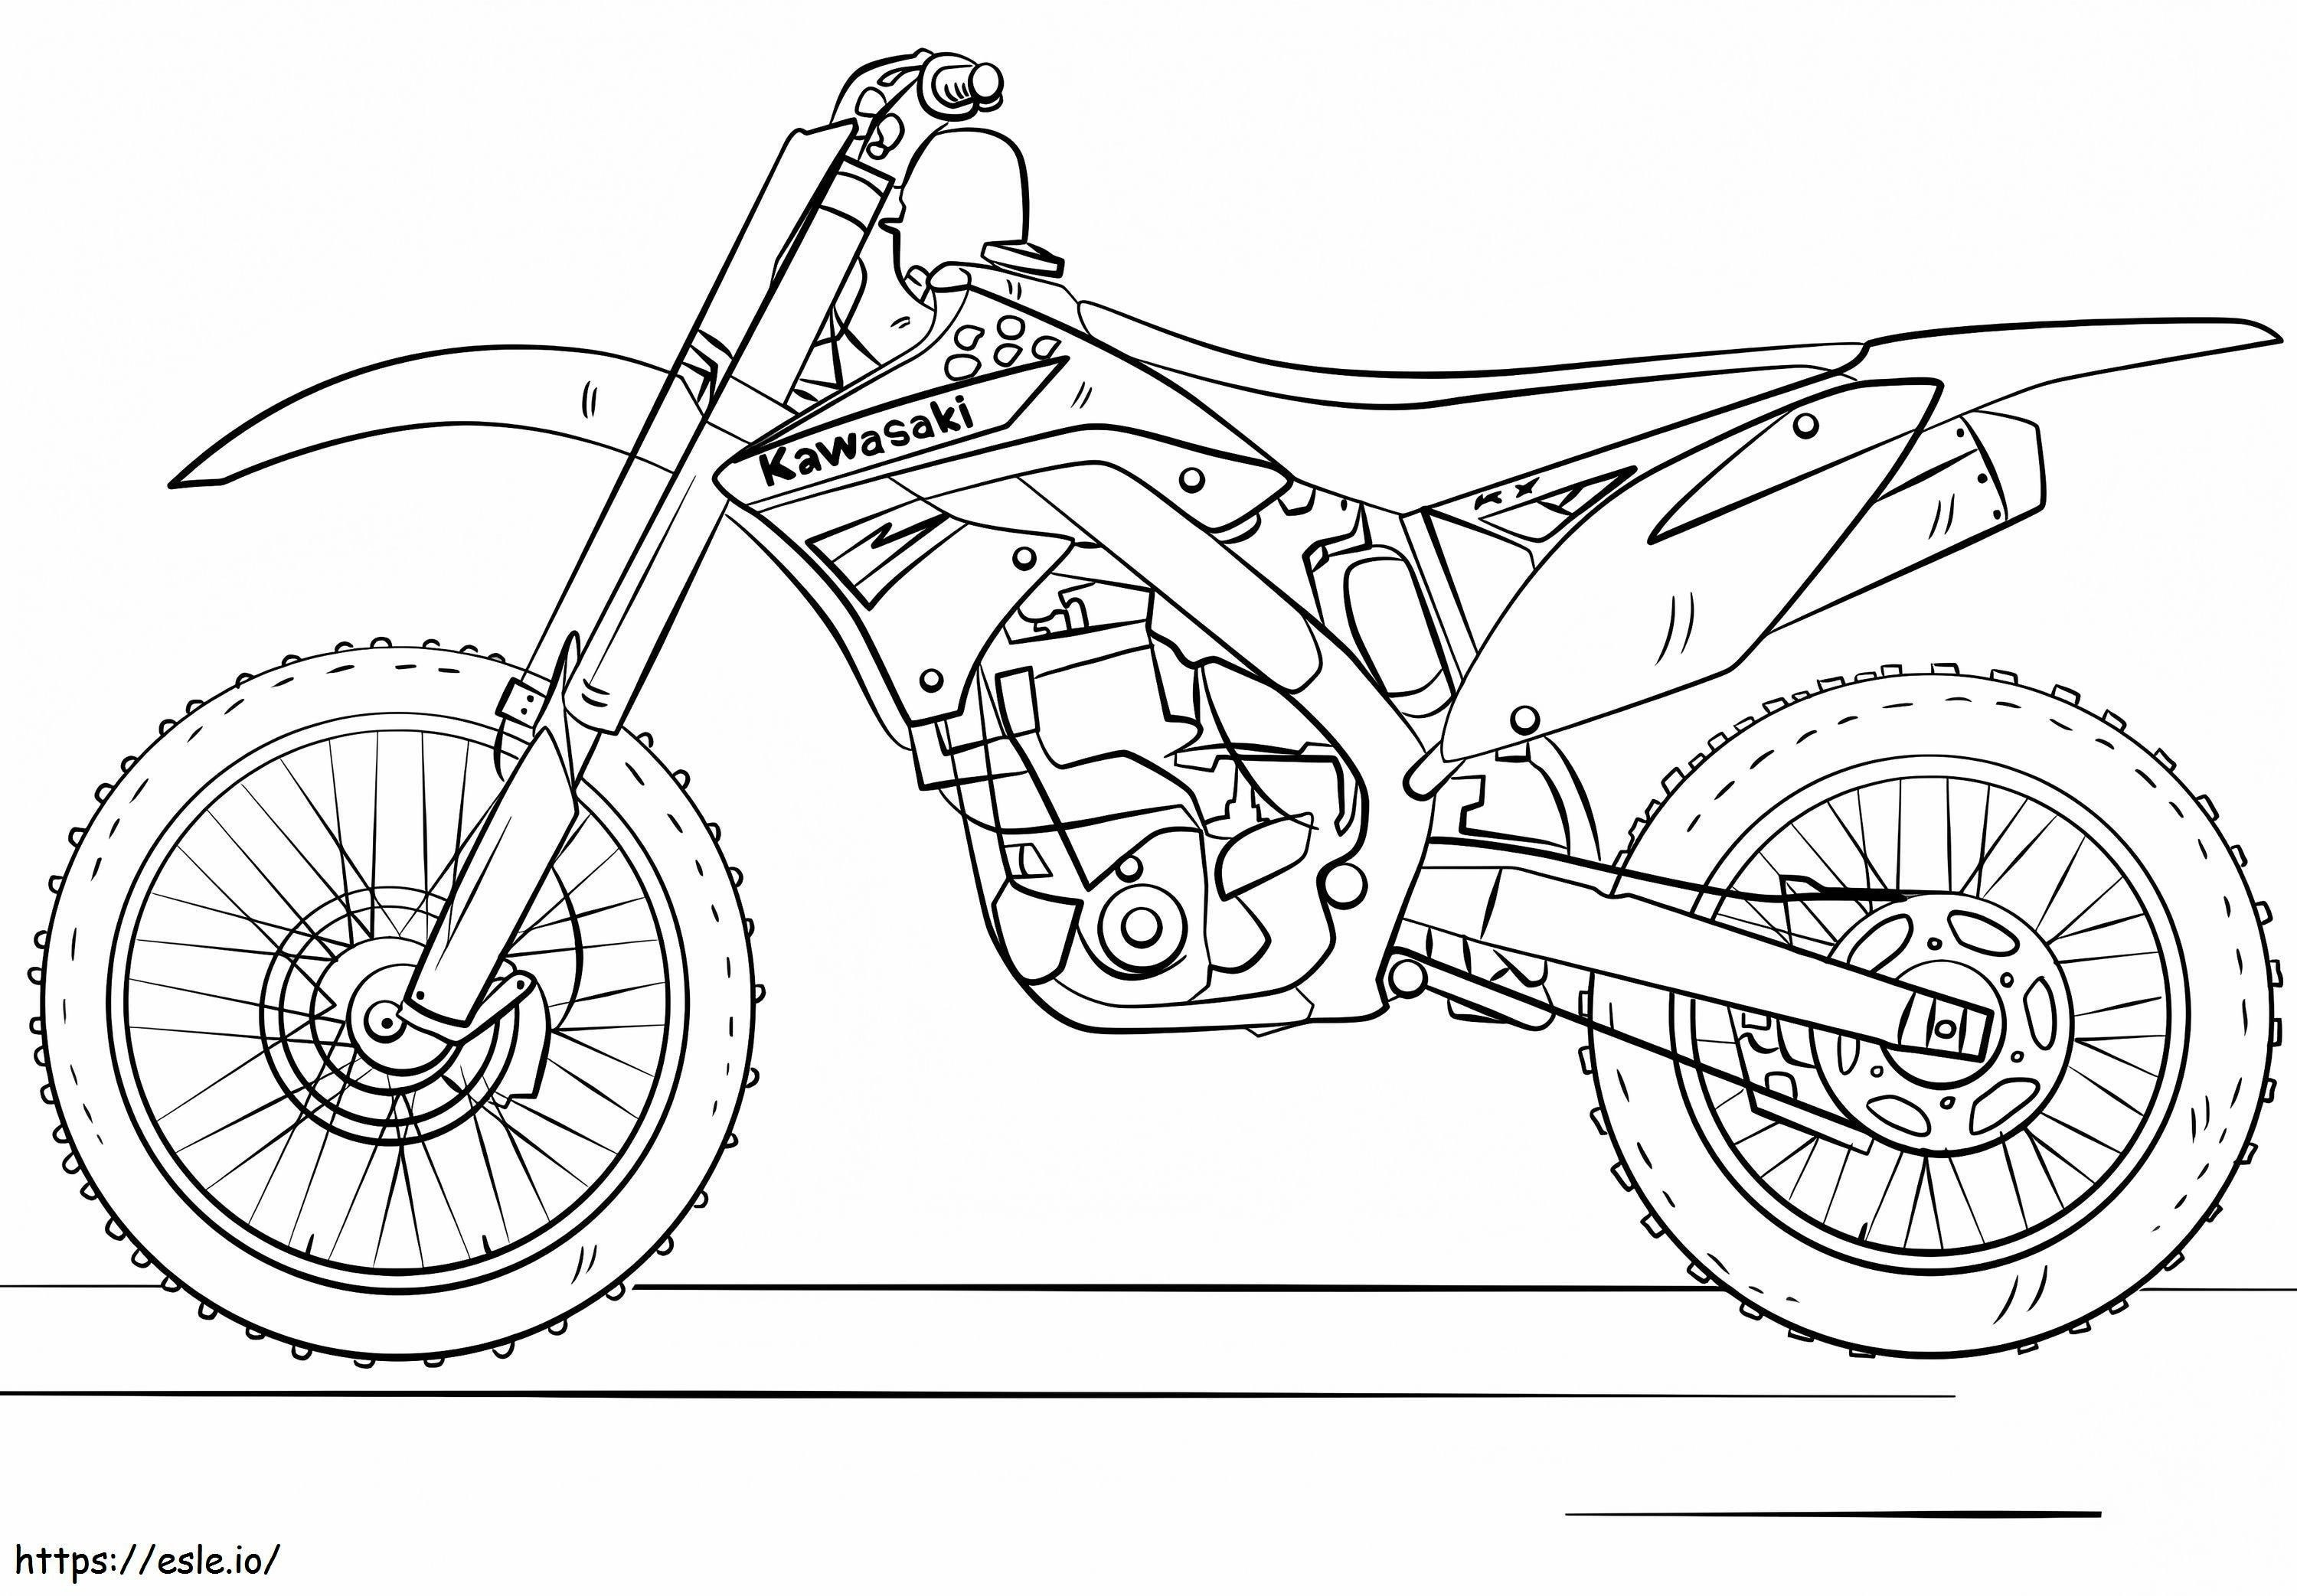 Kawasaki Motocross Bike coloring page